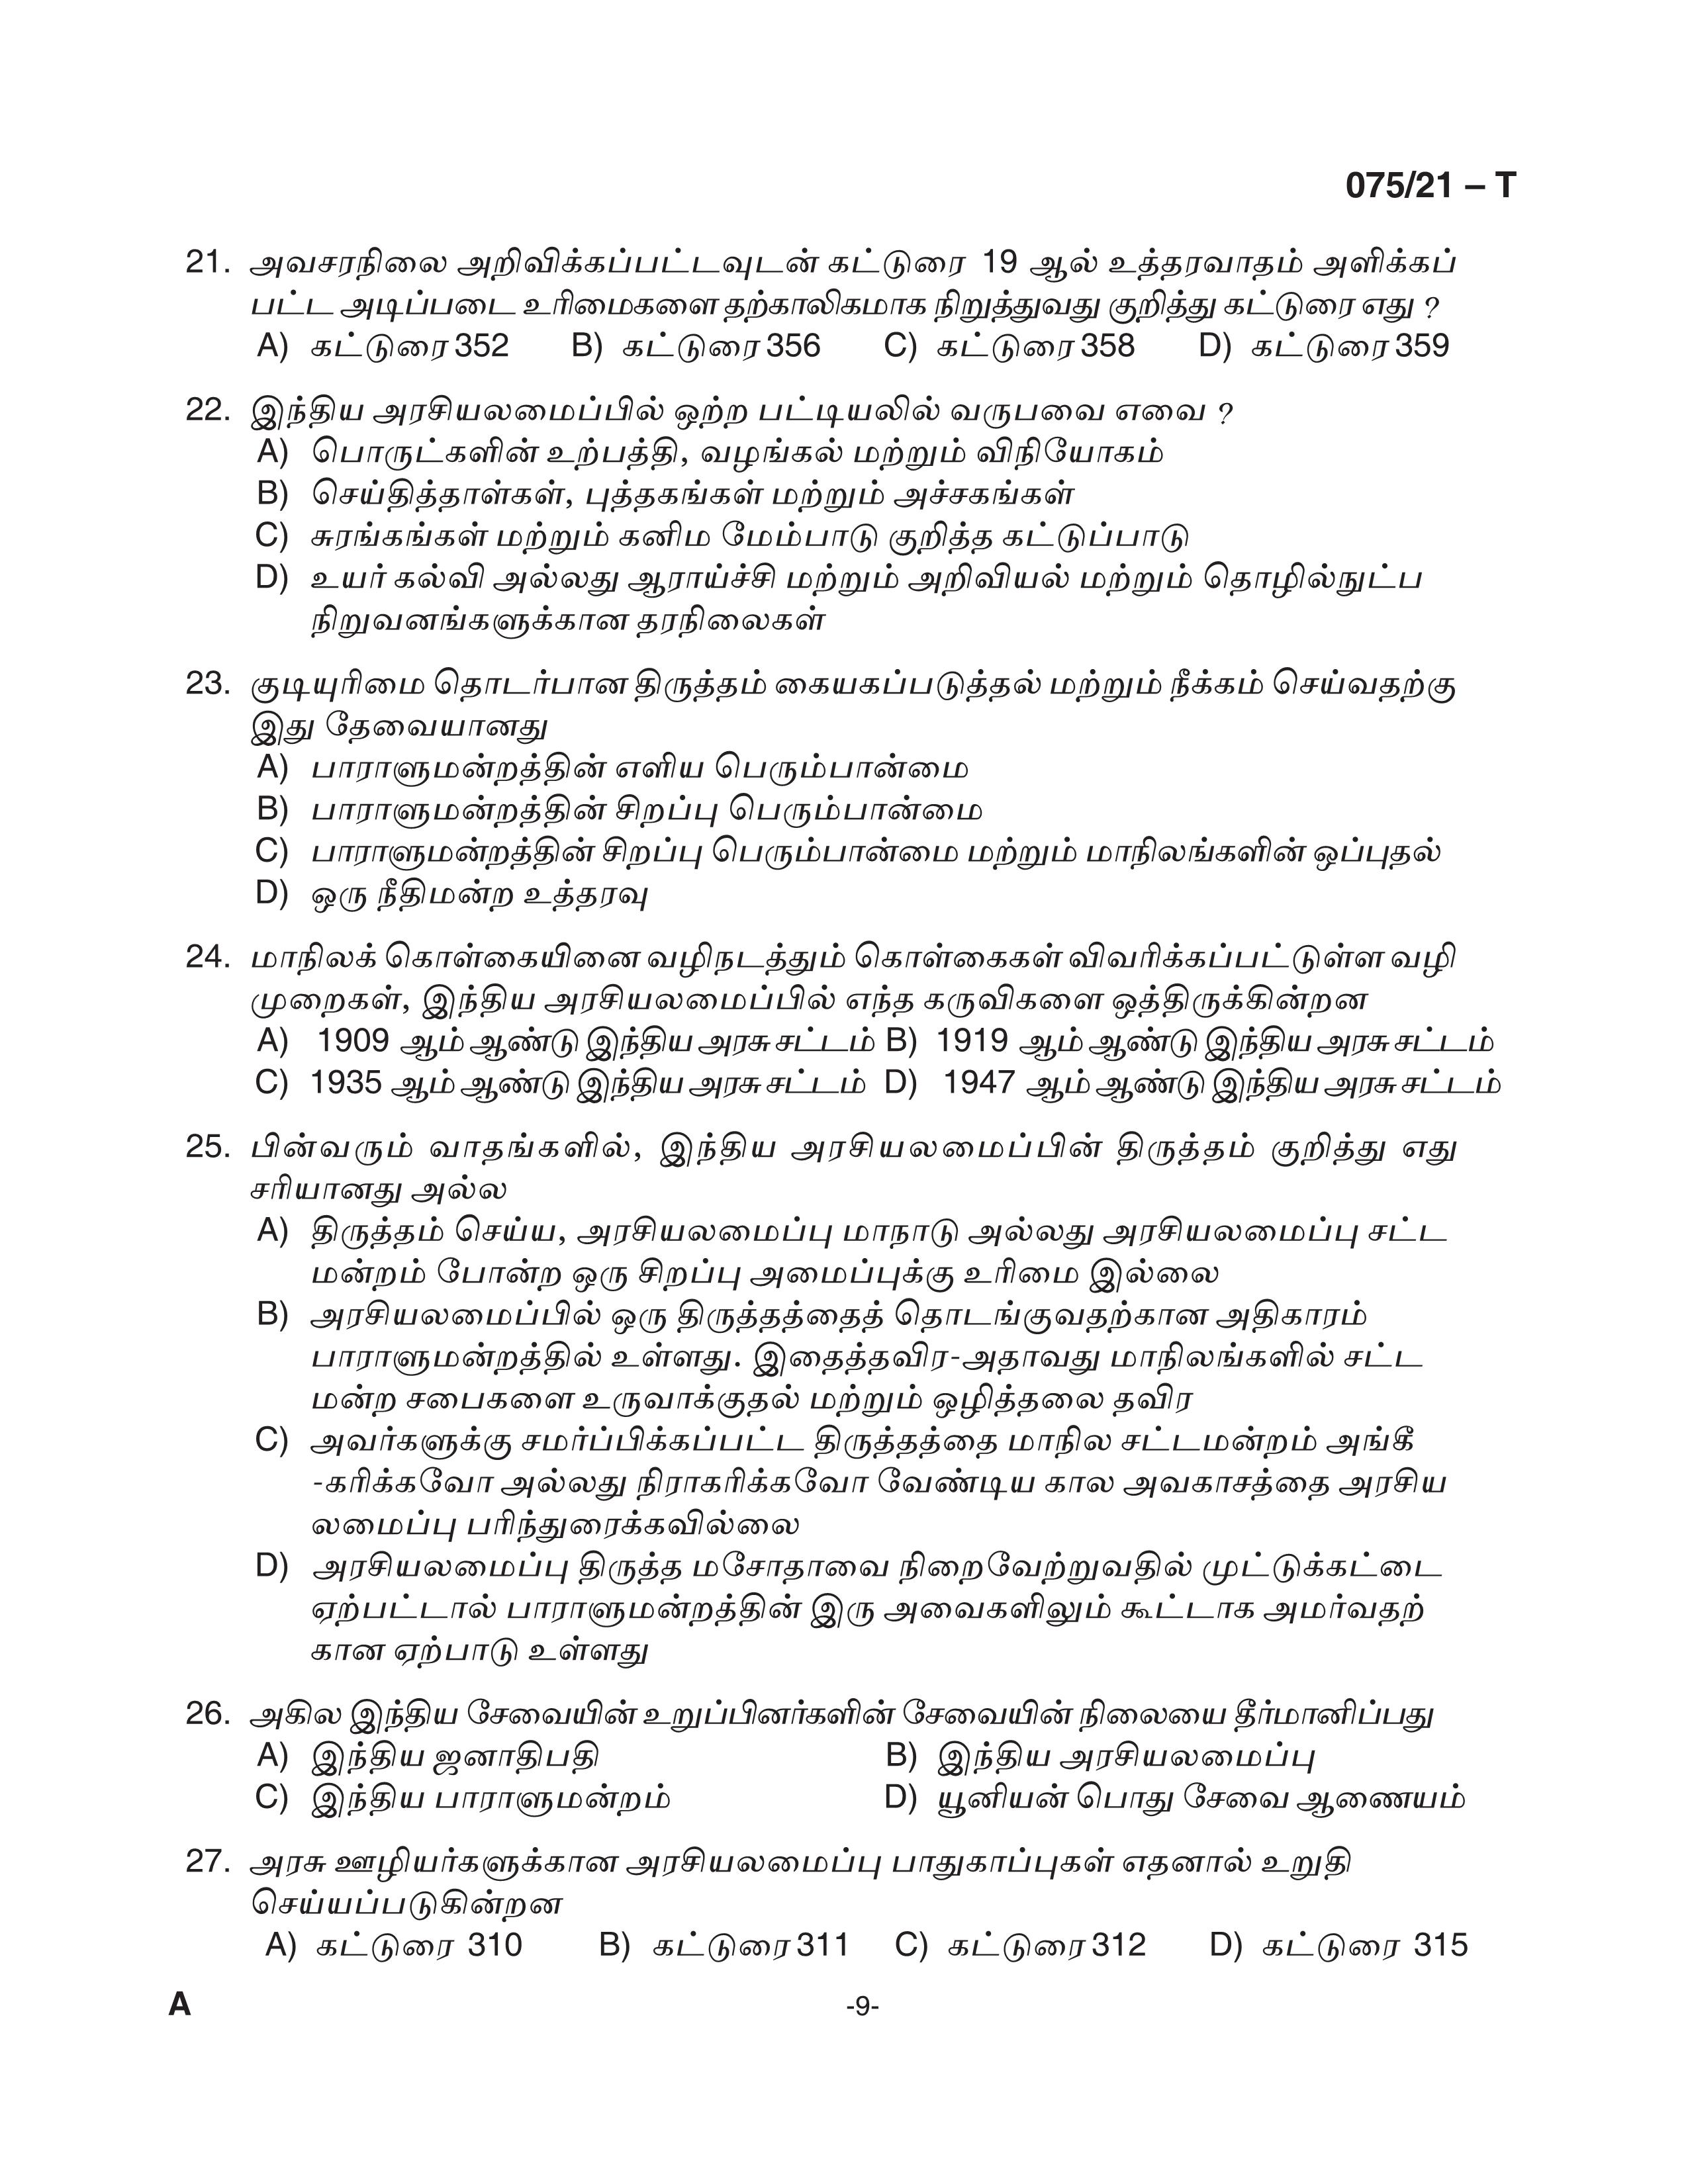 KPSC Degree Level Preliminary Exam Stage I Tamil 2021 Code 07521 T 9